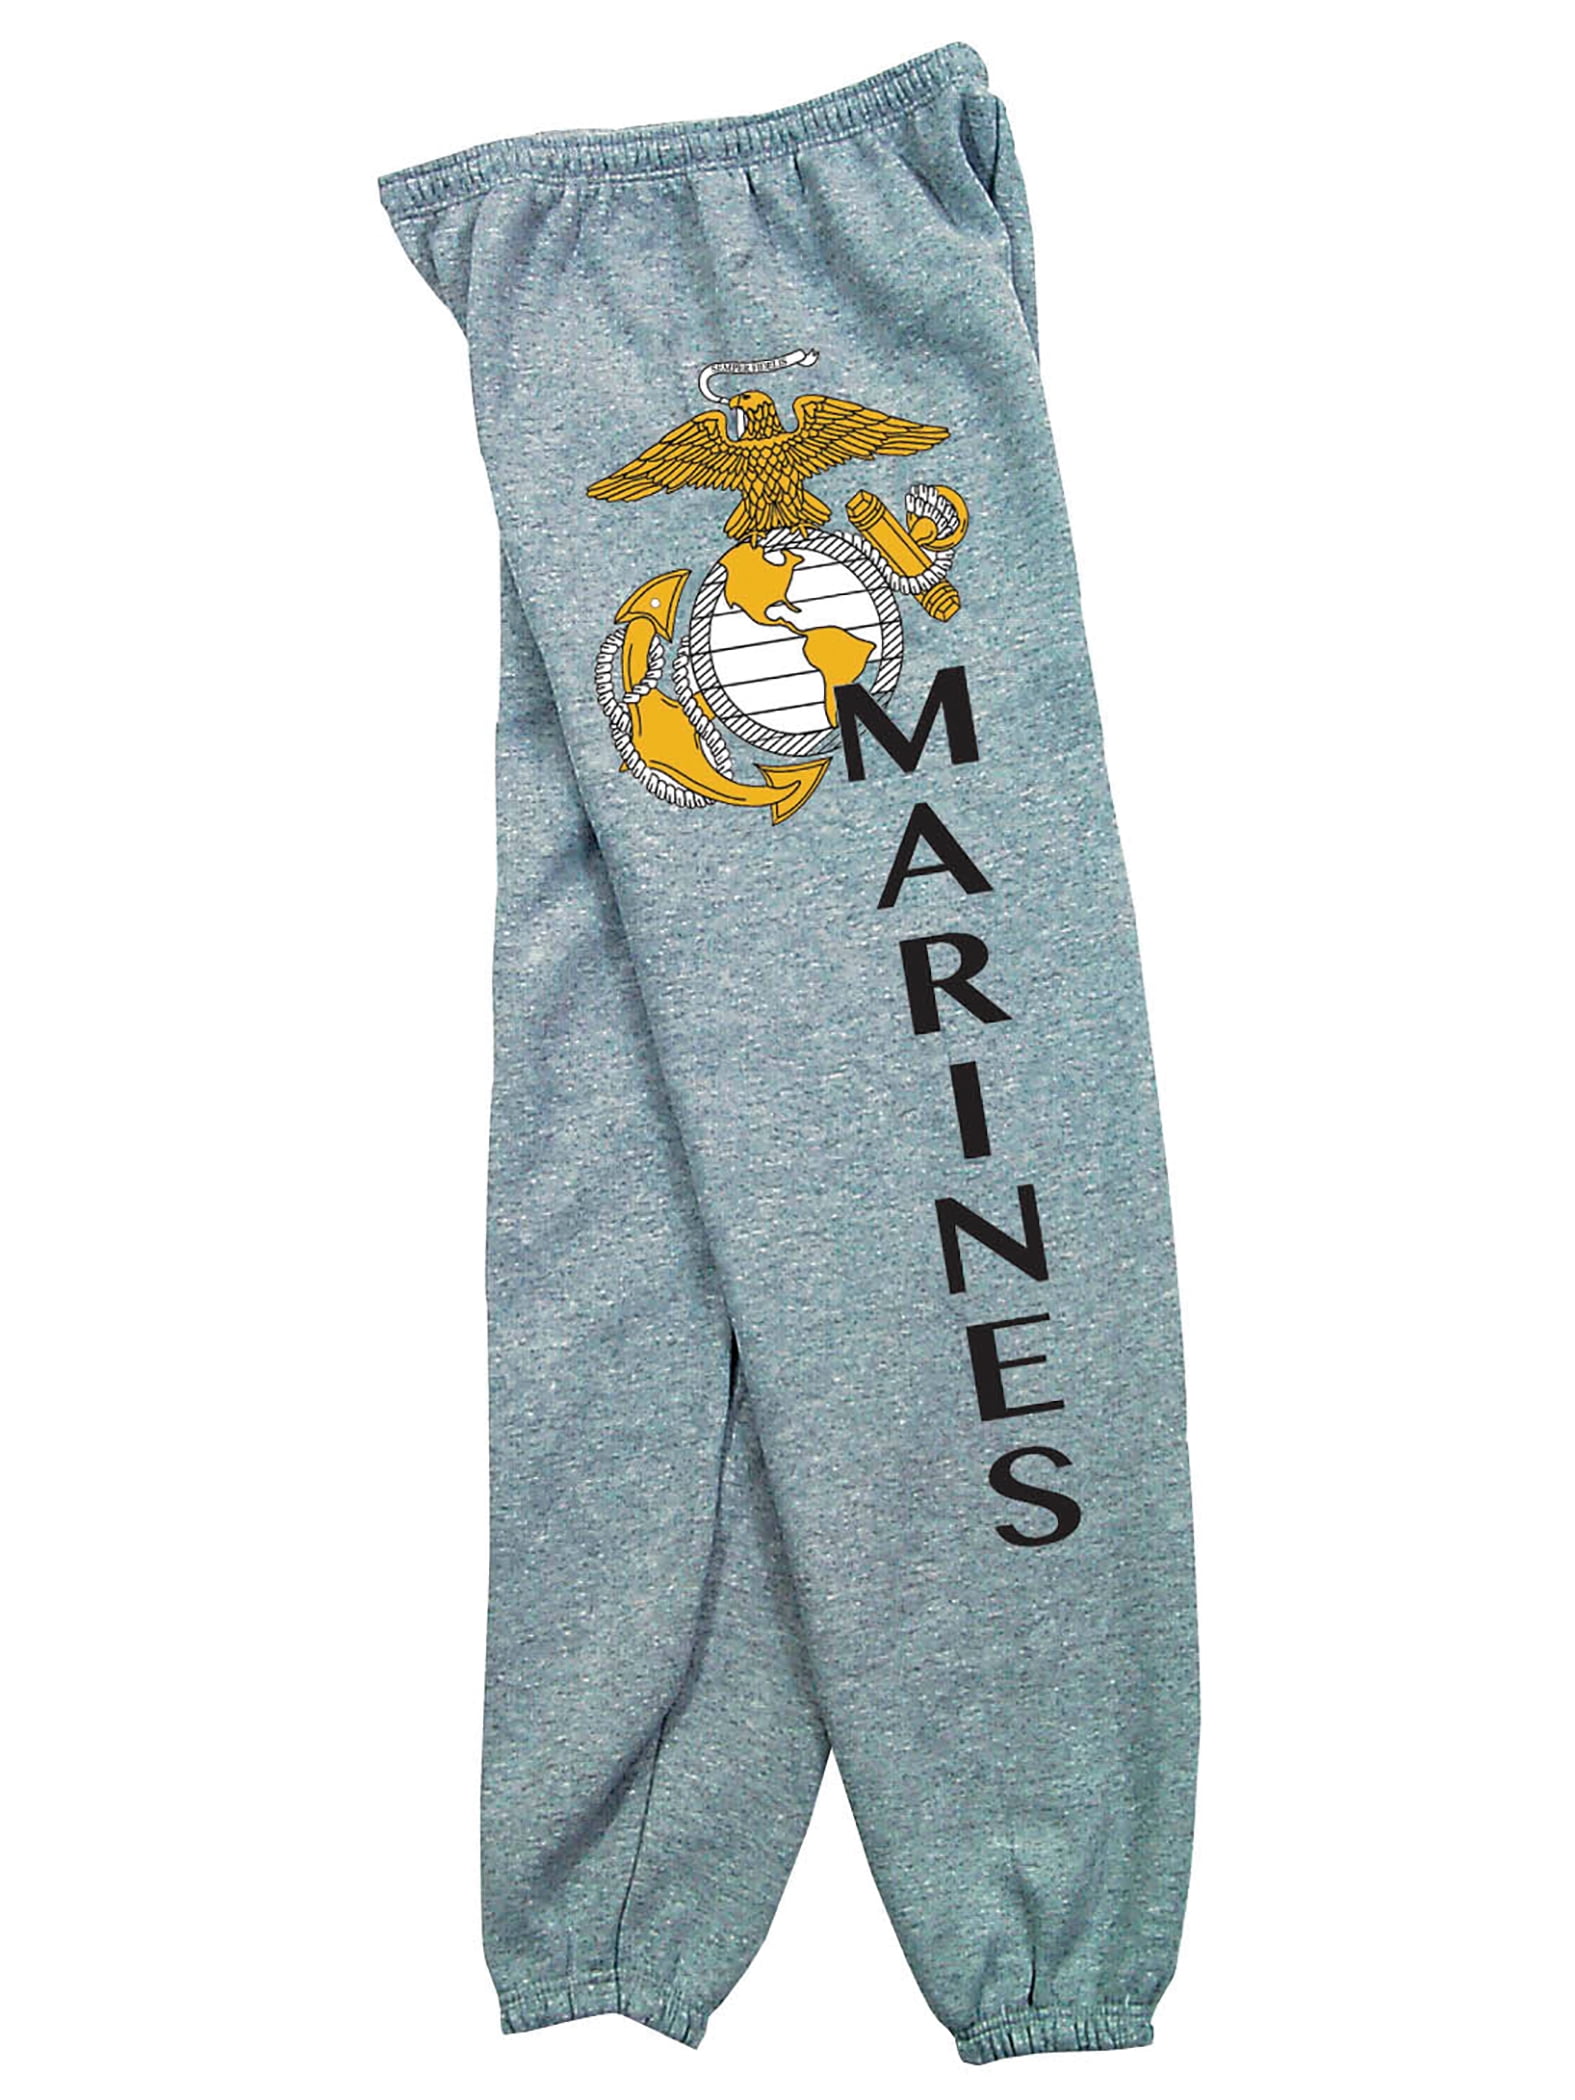 Never-Cold USMC Marine Corps Logo Kids Boys Cotton Sweatpants Elastic Waist Pants for 2T-6T